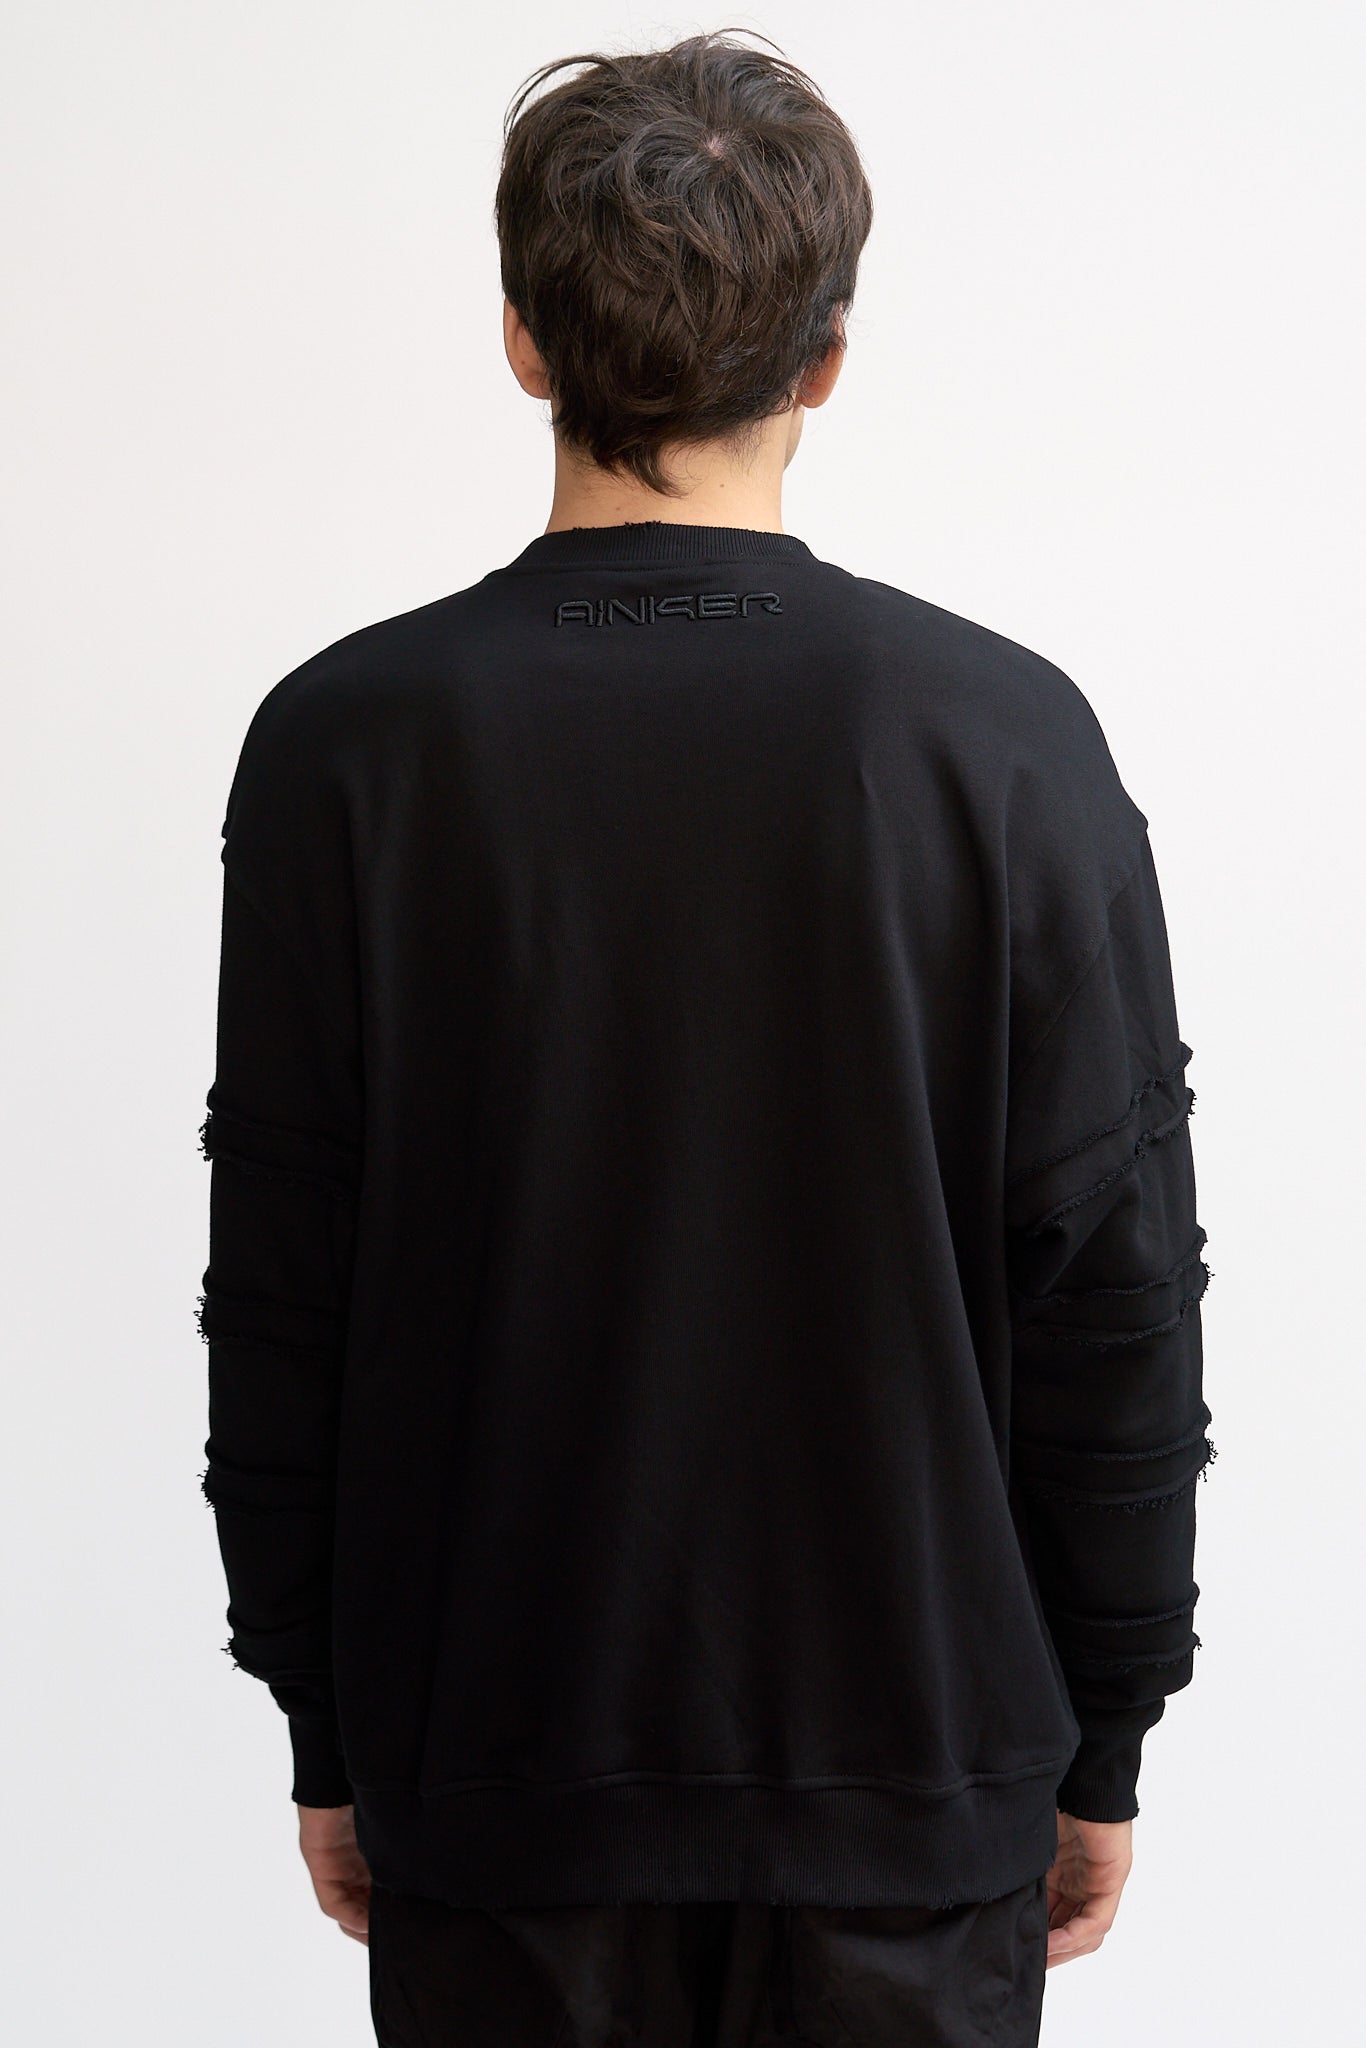 AR Black Sweatshirt